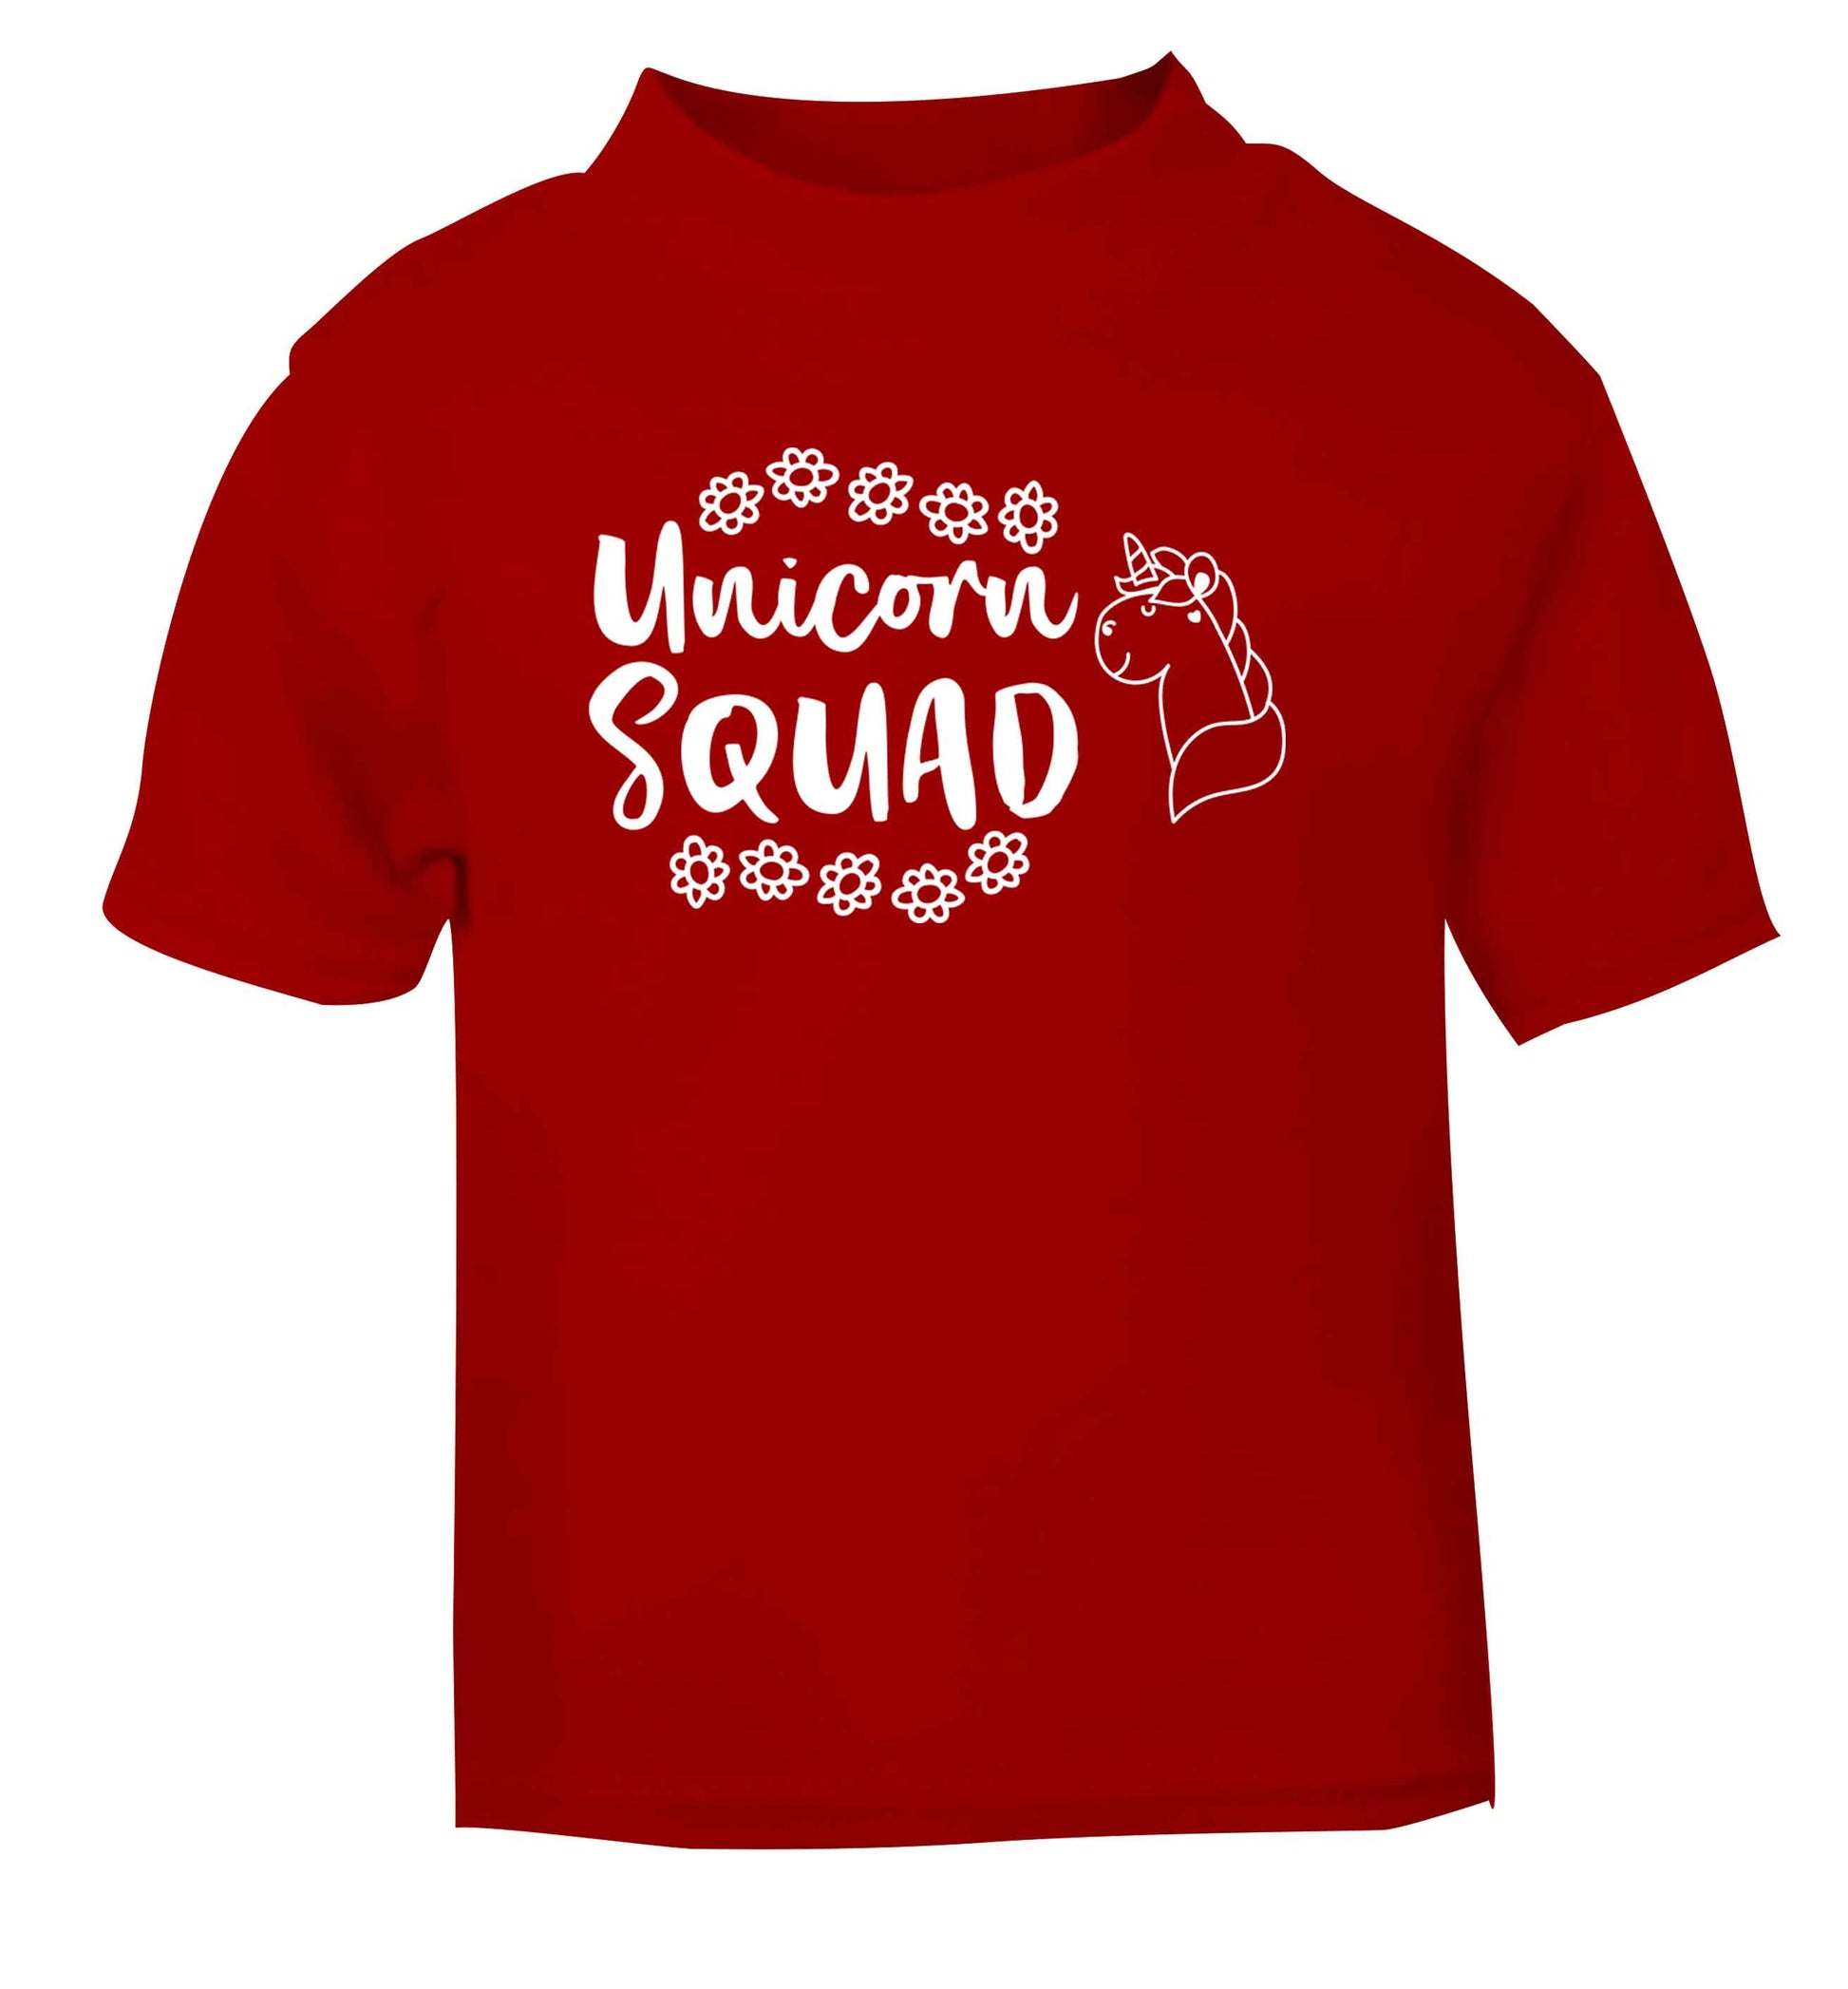 Unicorn Squad red Baby Toddler Tshirt 2 Years